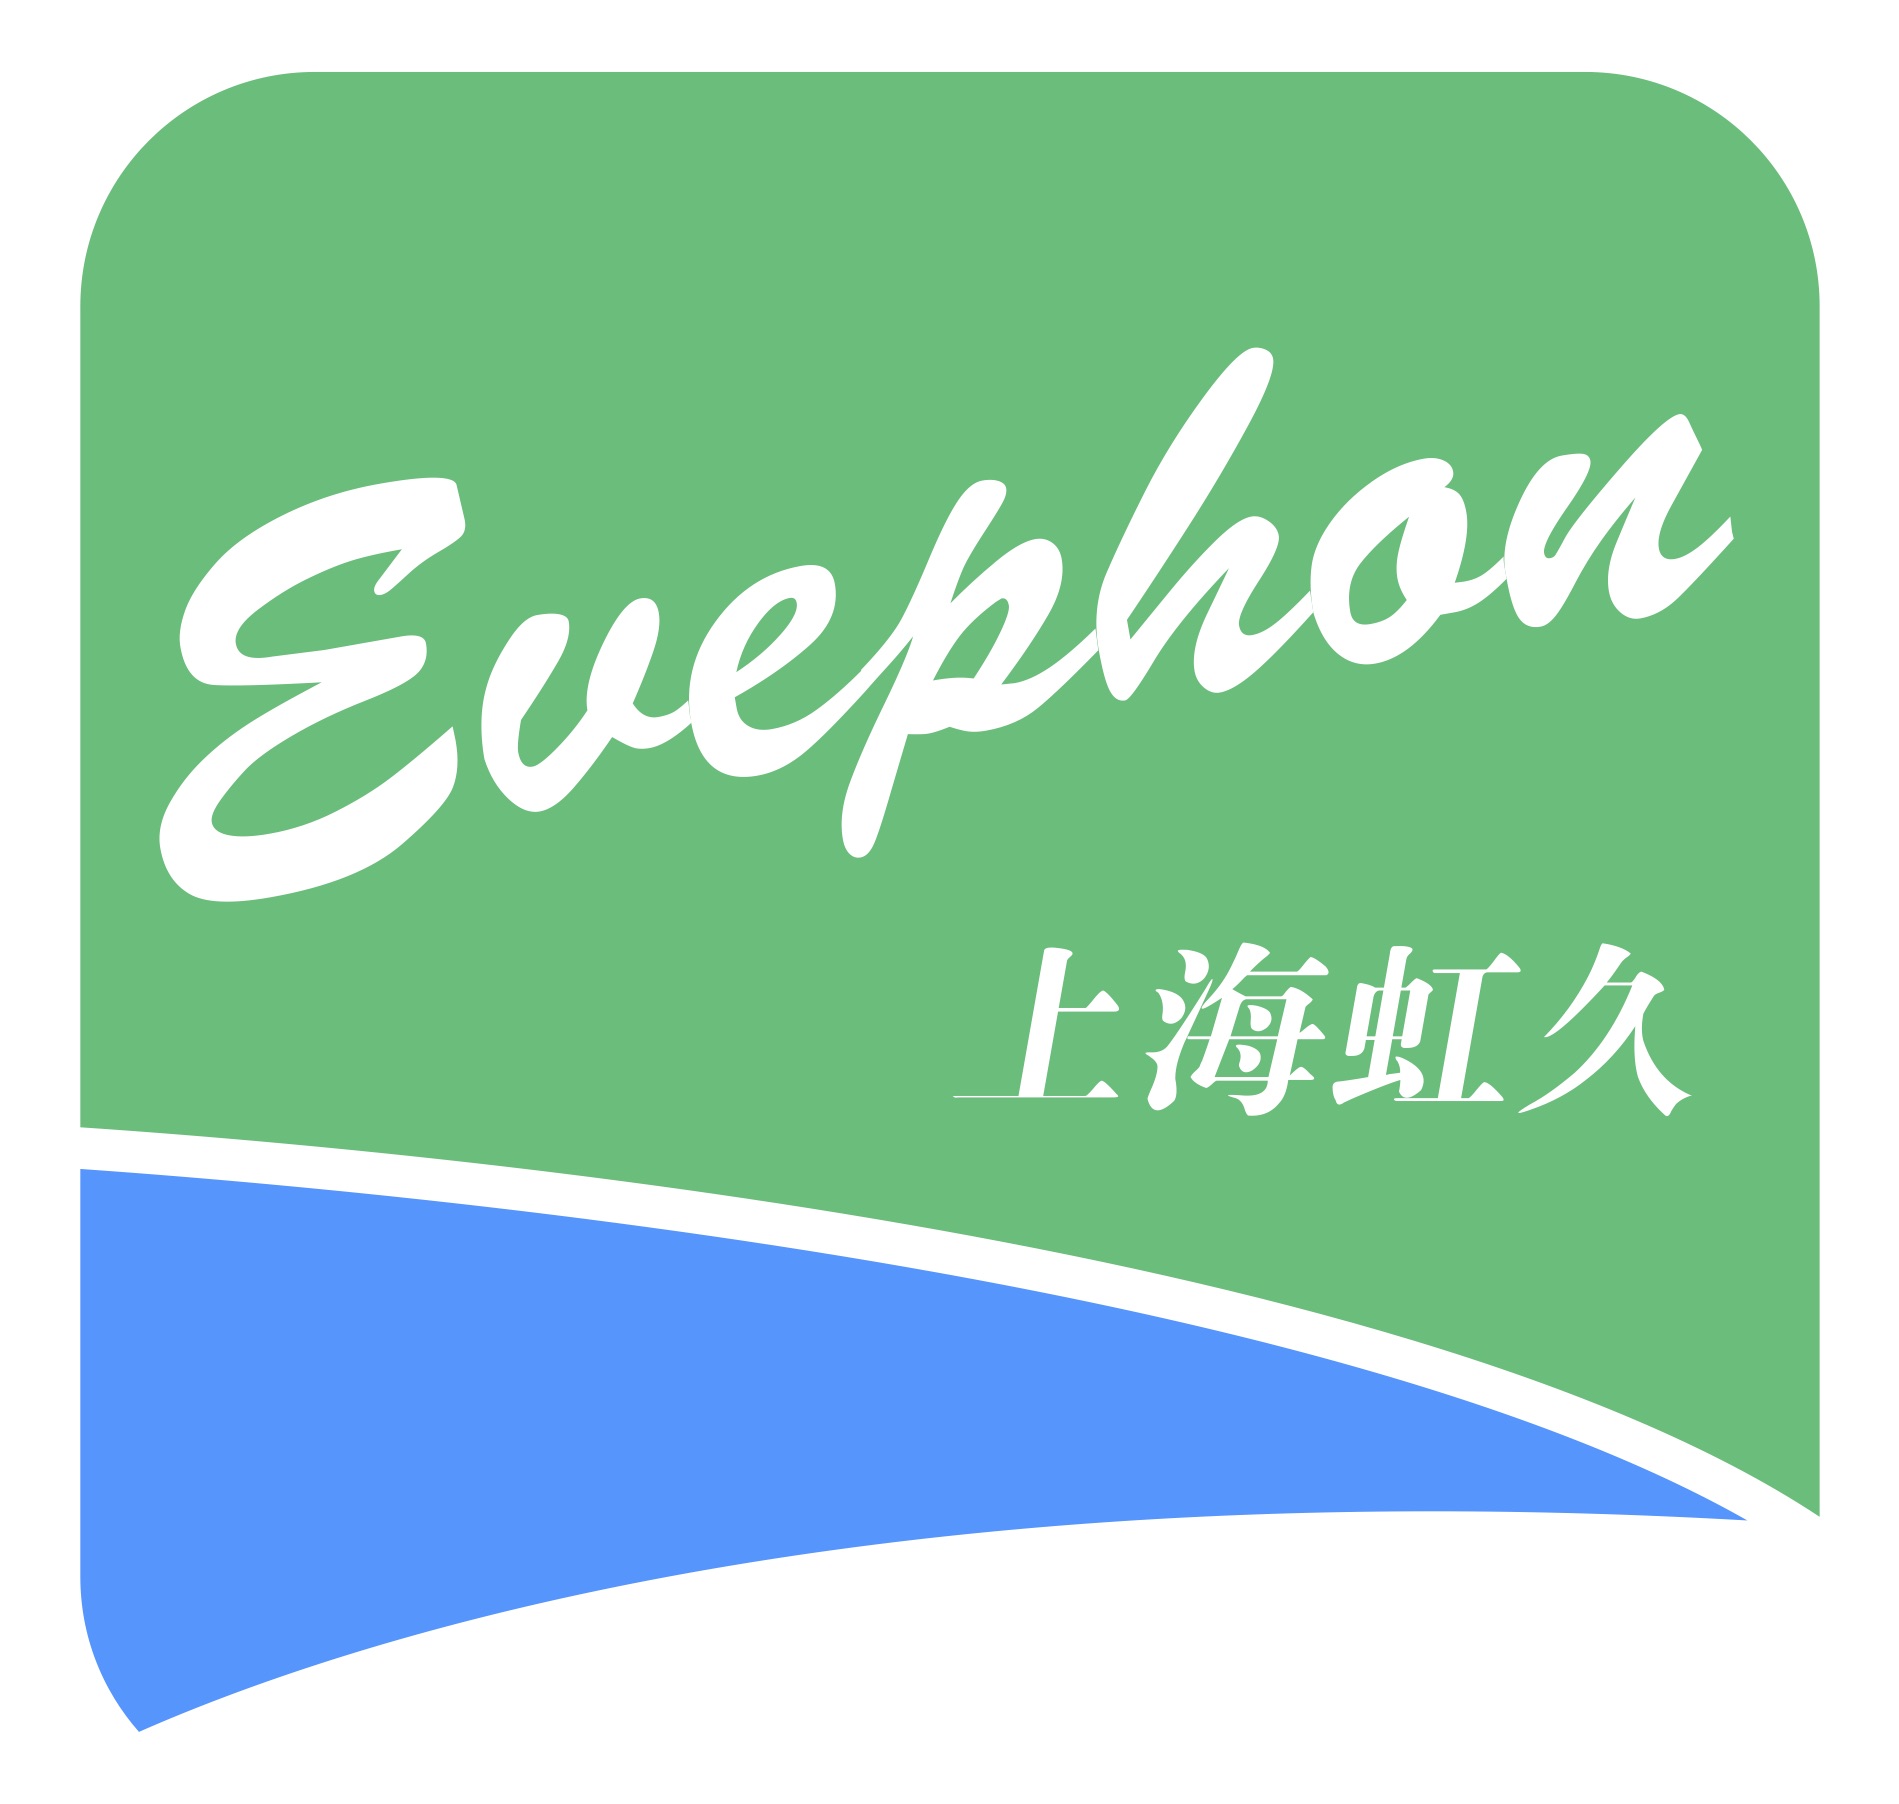 Evephon